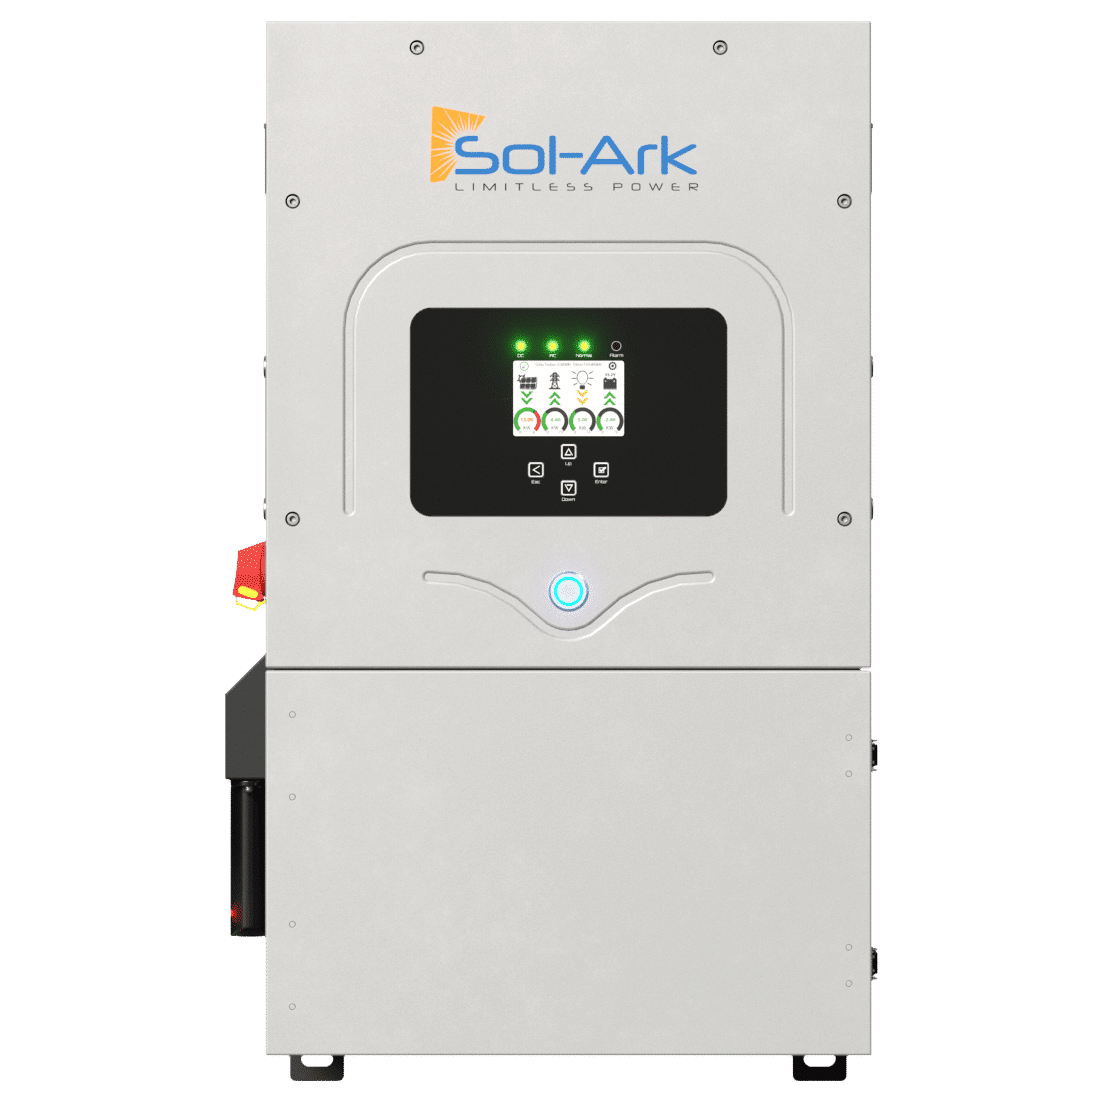 51.2V 800Ah 40 kWh Sol-Ark LiFePO4 Lithium Batterie Energiespeichersystem - POWERSYNC  Energy Solutions